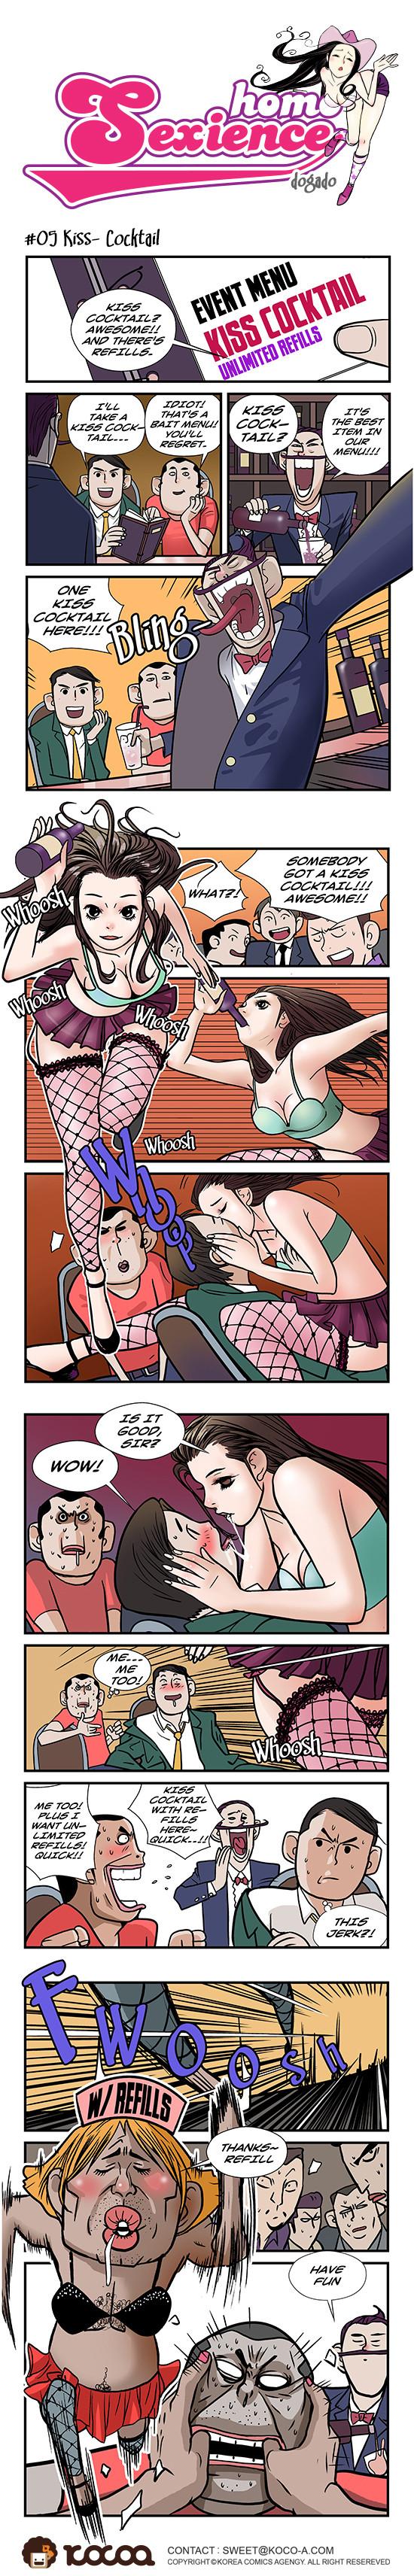 Tesao Homo Sexience Licking Pussy - Page 5